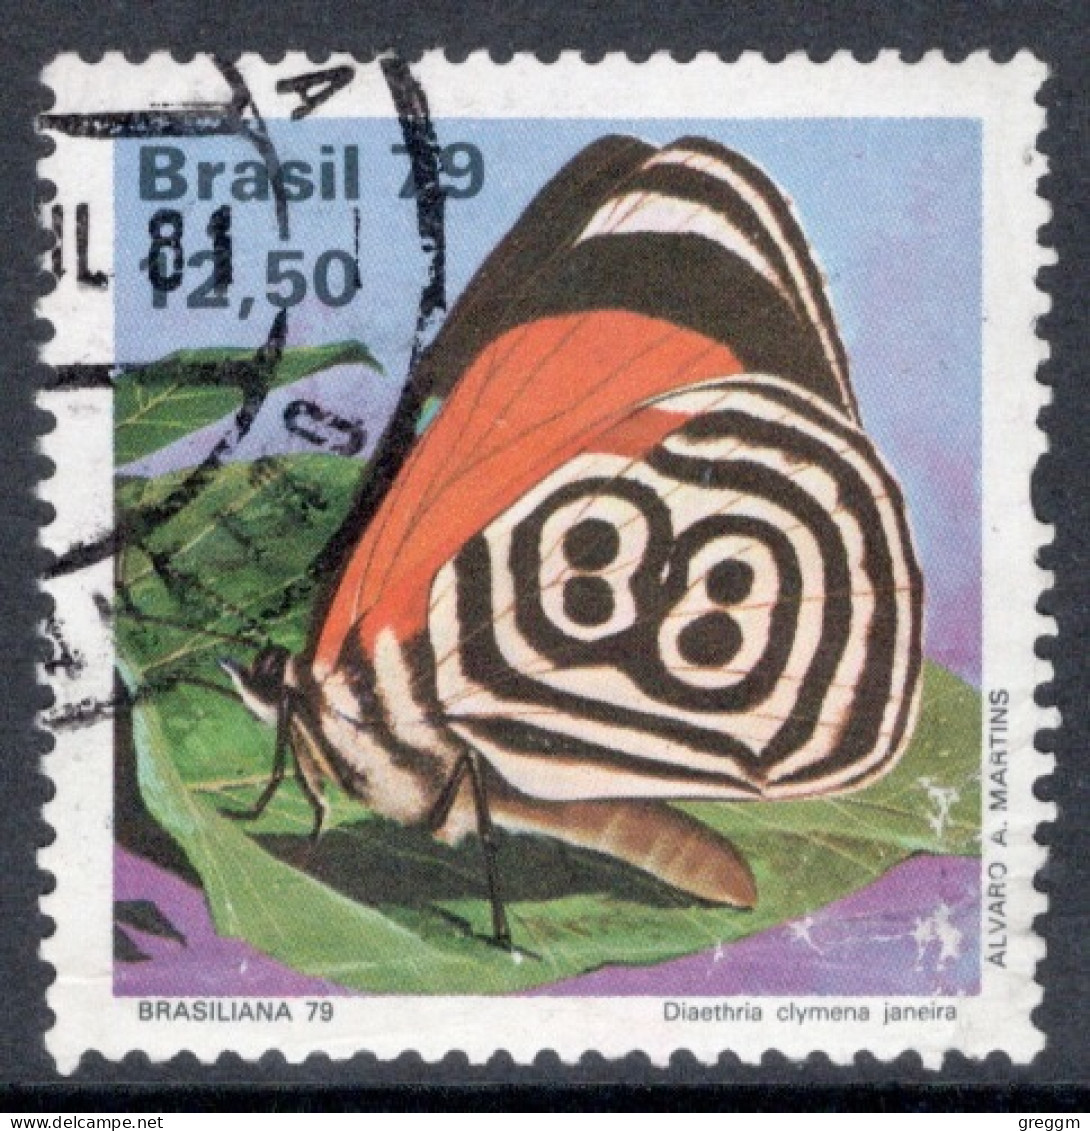 Brazil 1979 A Single Stamp International Stamp Exhibition "Brasiliana 79" - Butterflies In Fine Used - Usati